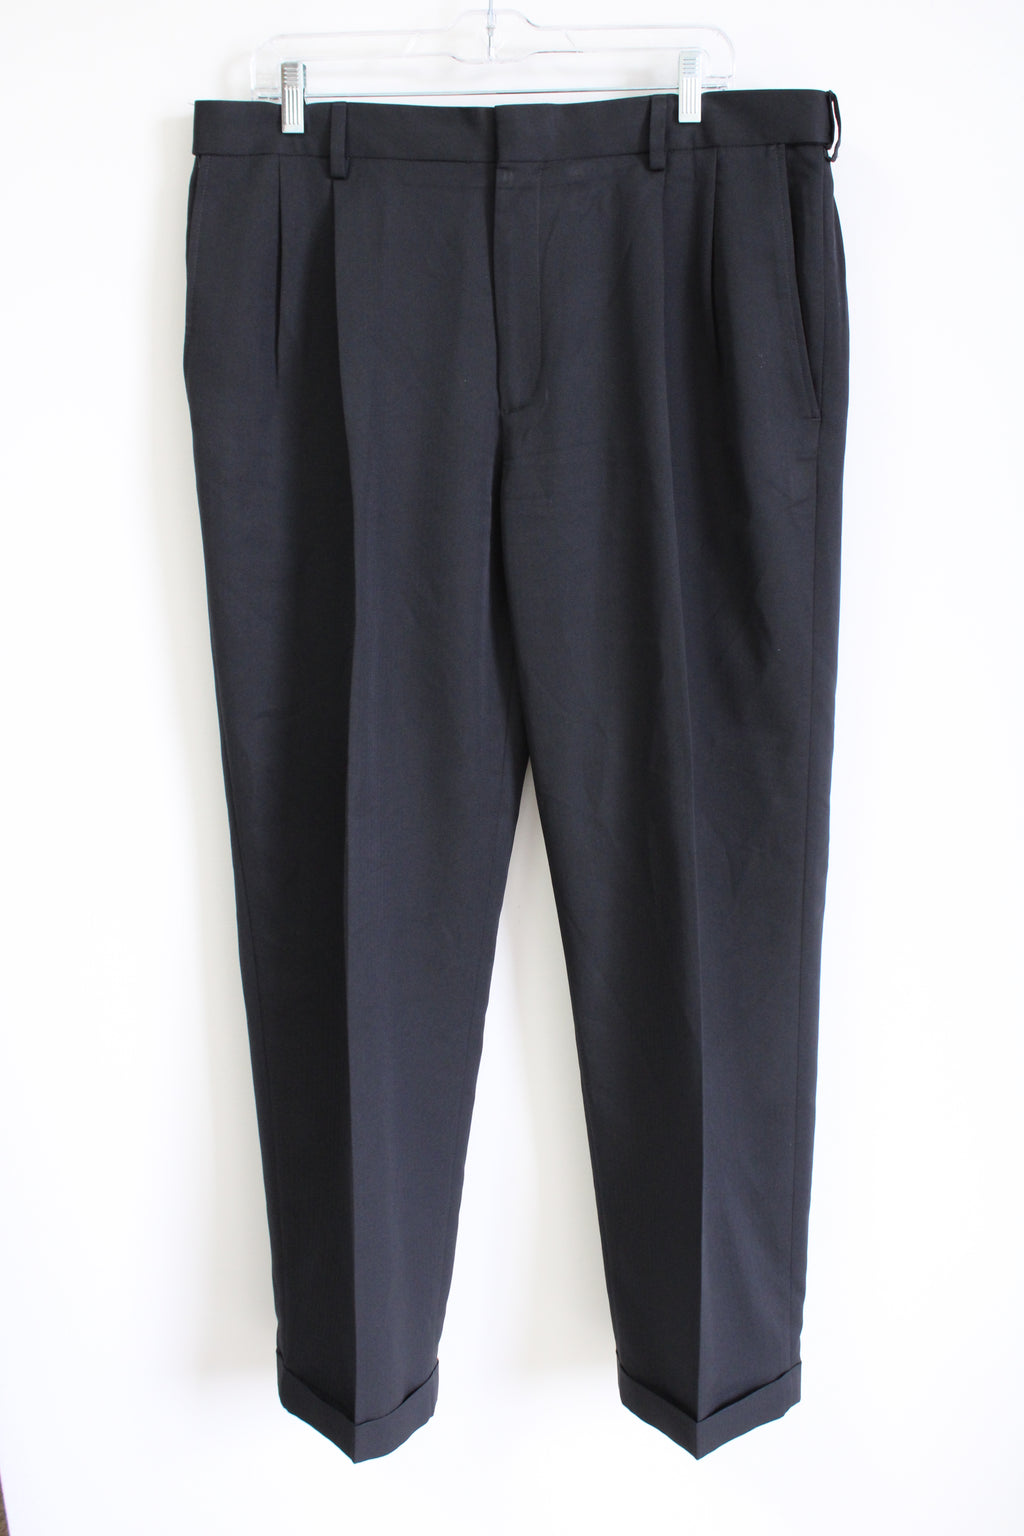 Haggar Classic Fit Black Dress Pants | 36X30